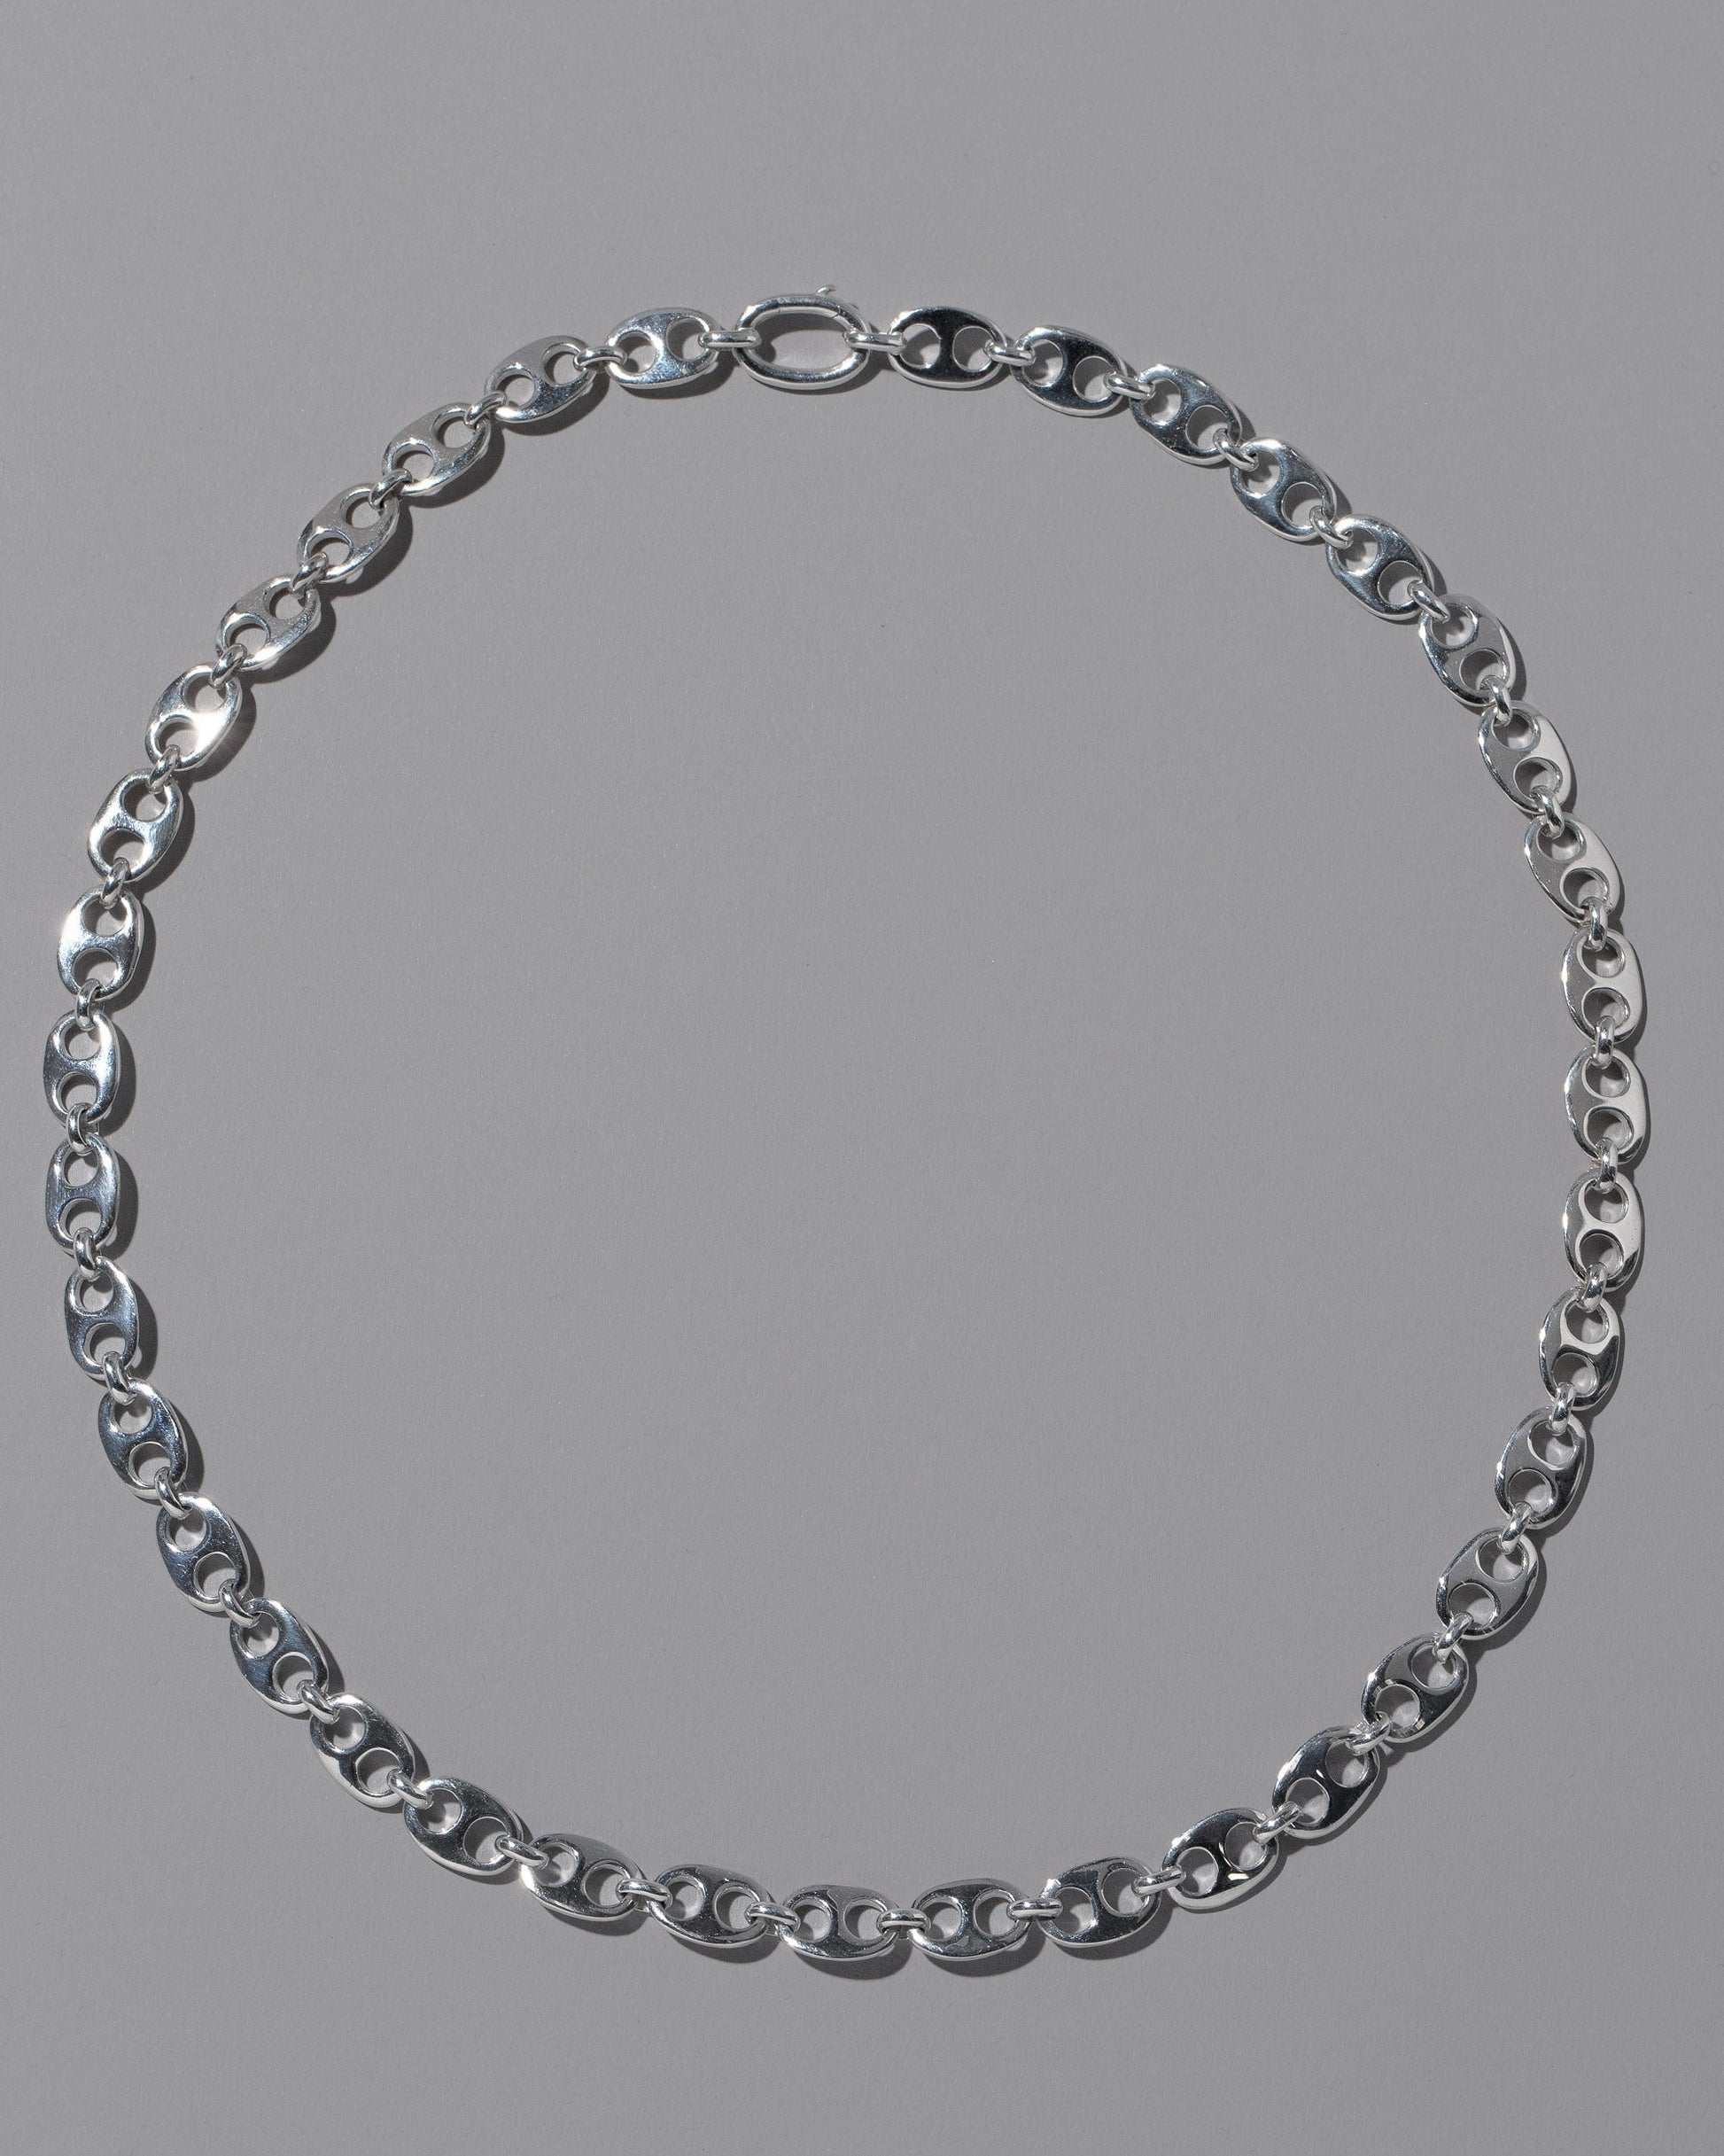 CRZM Sterling Silver Yuba Mini Necklace on light color background.